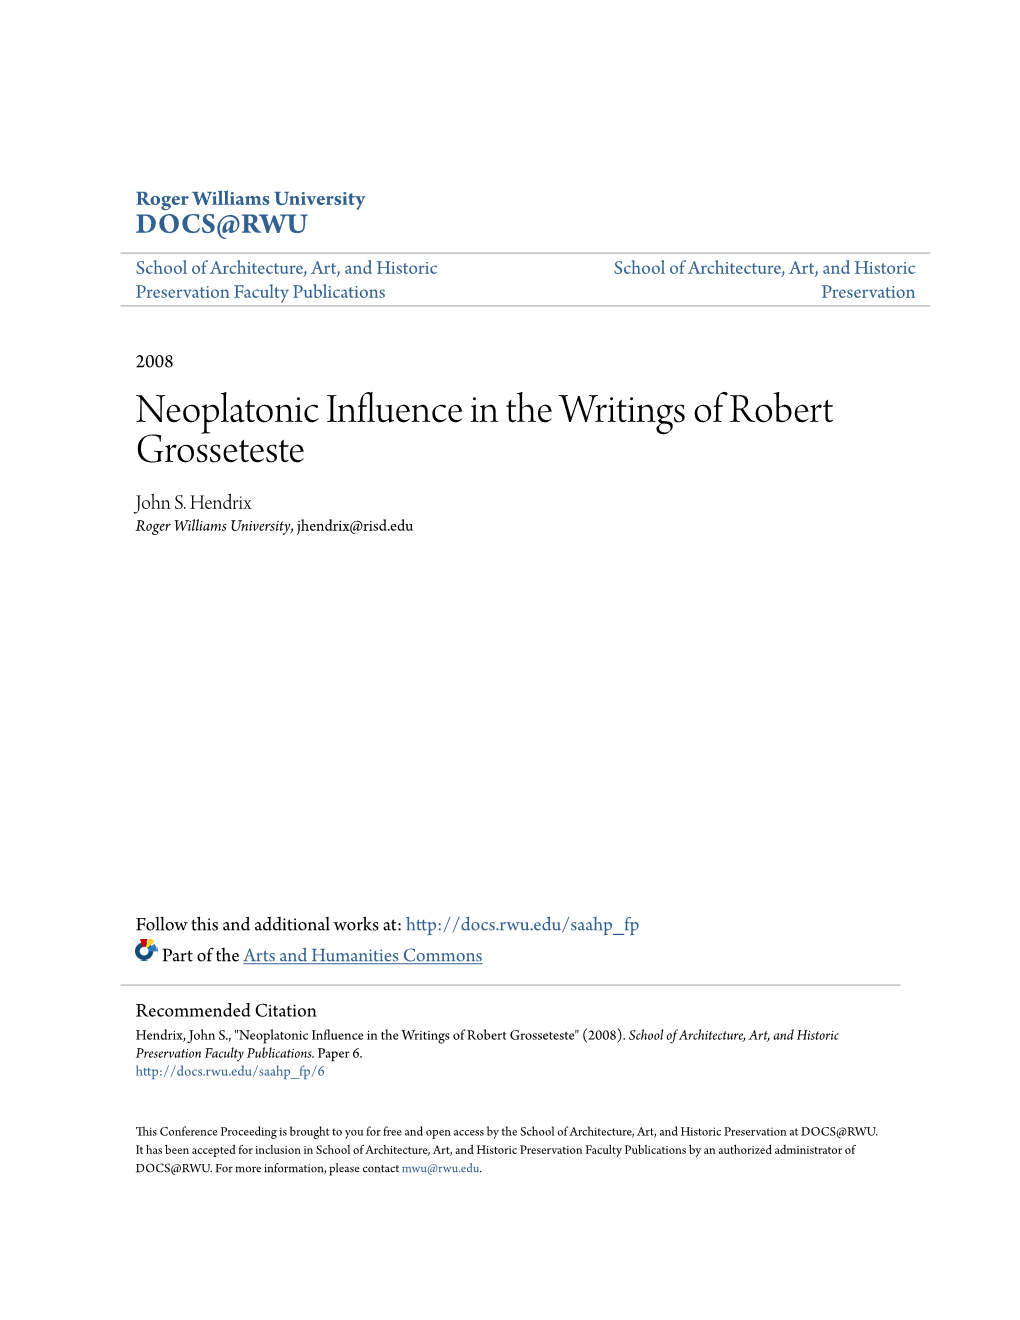 Neoplatonic Influence in the Writings of Robert Grosseteste John S